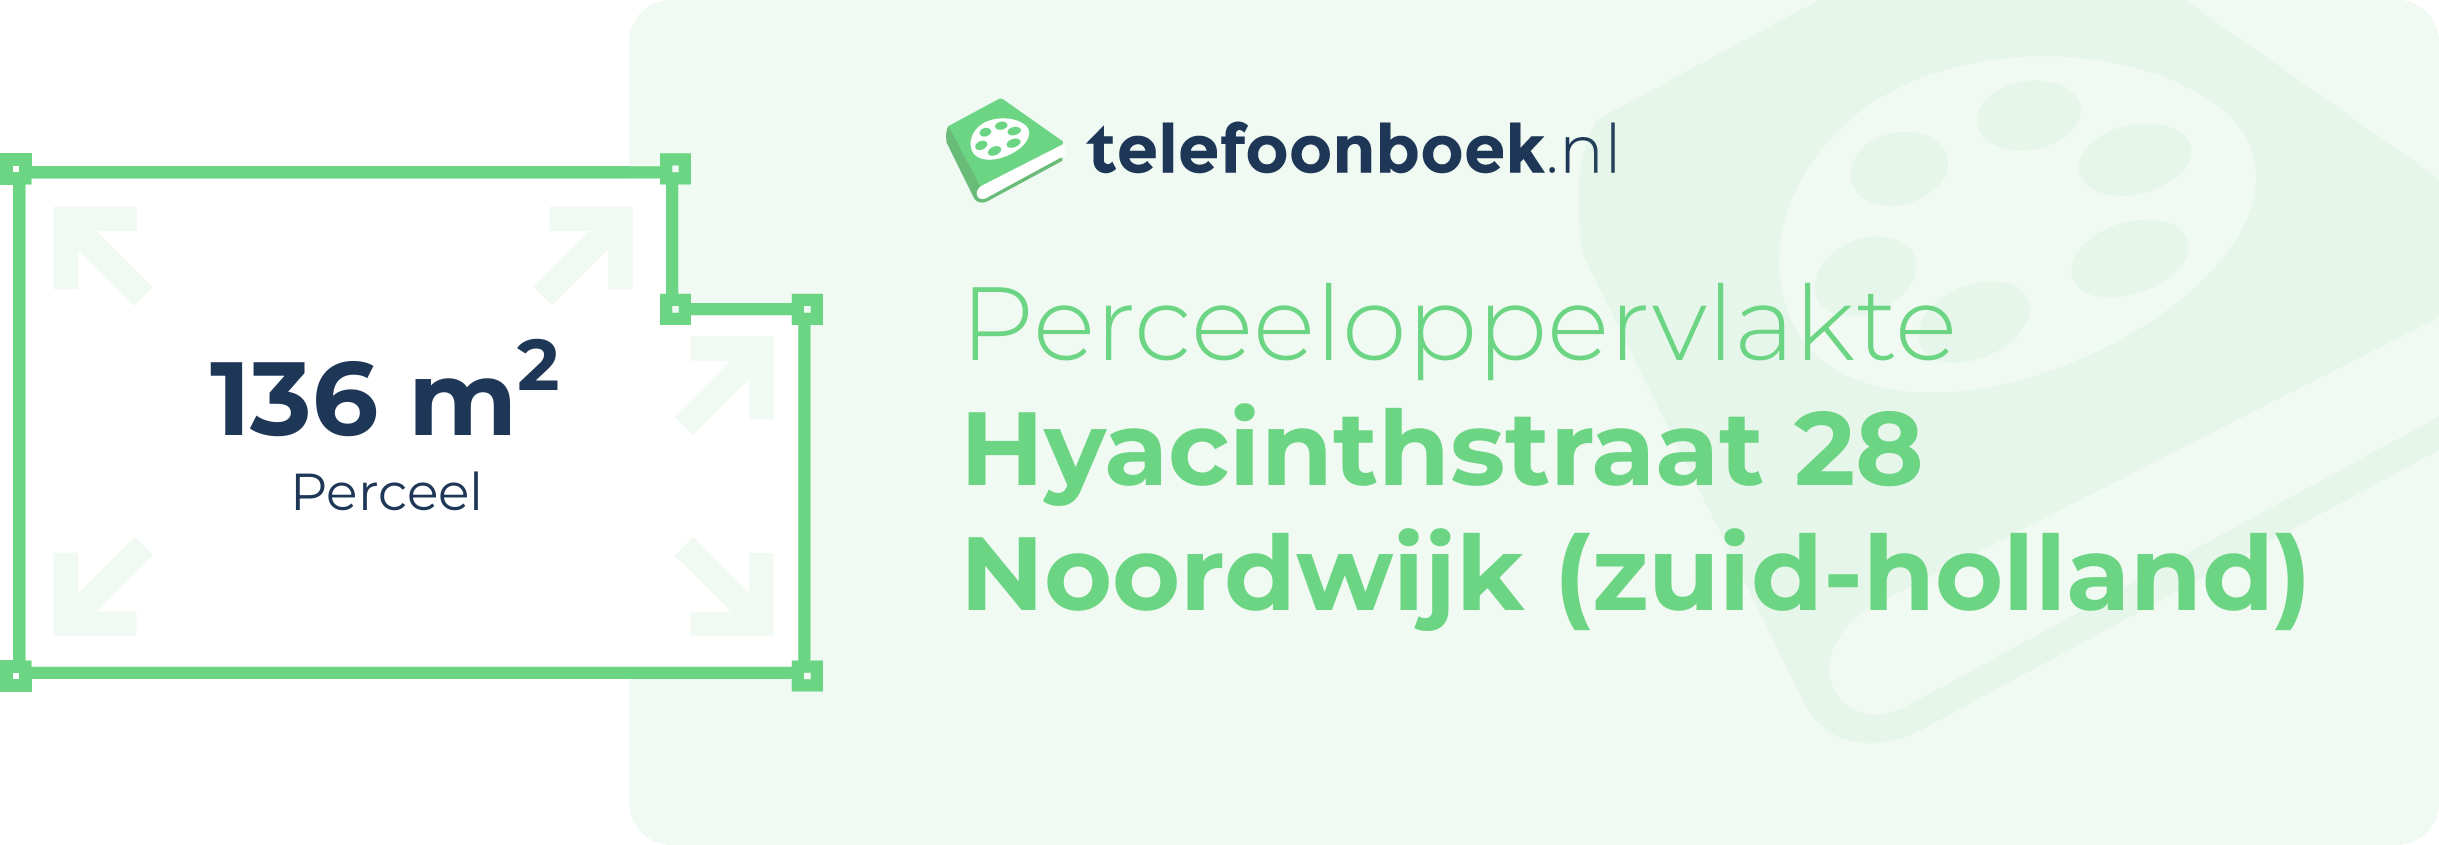 Perceeloppervlakte Hyacinthstraat 28 Noordwijk (Zuid-Holland)